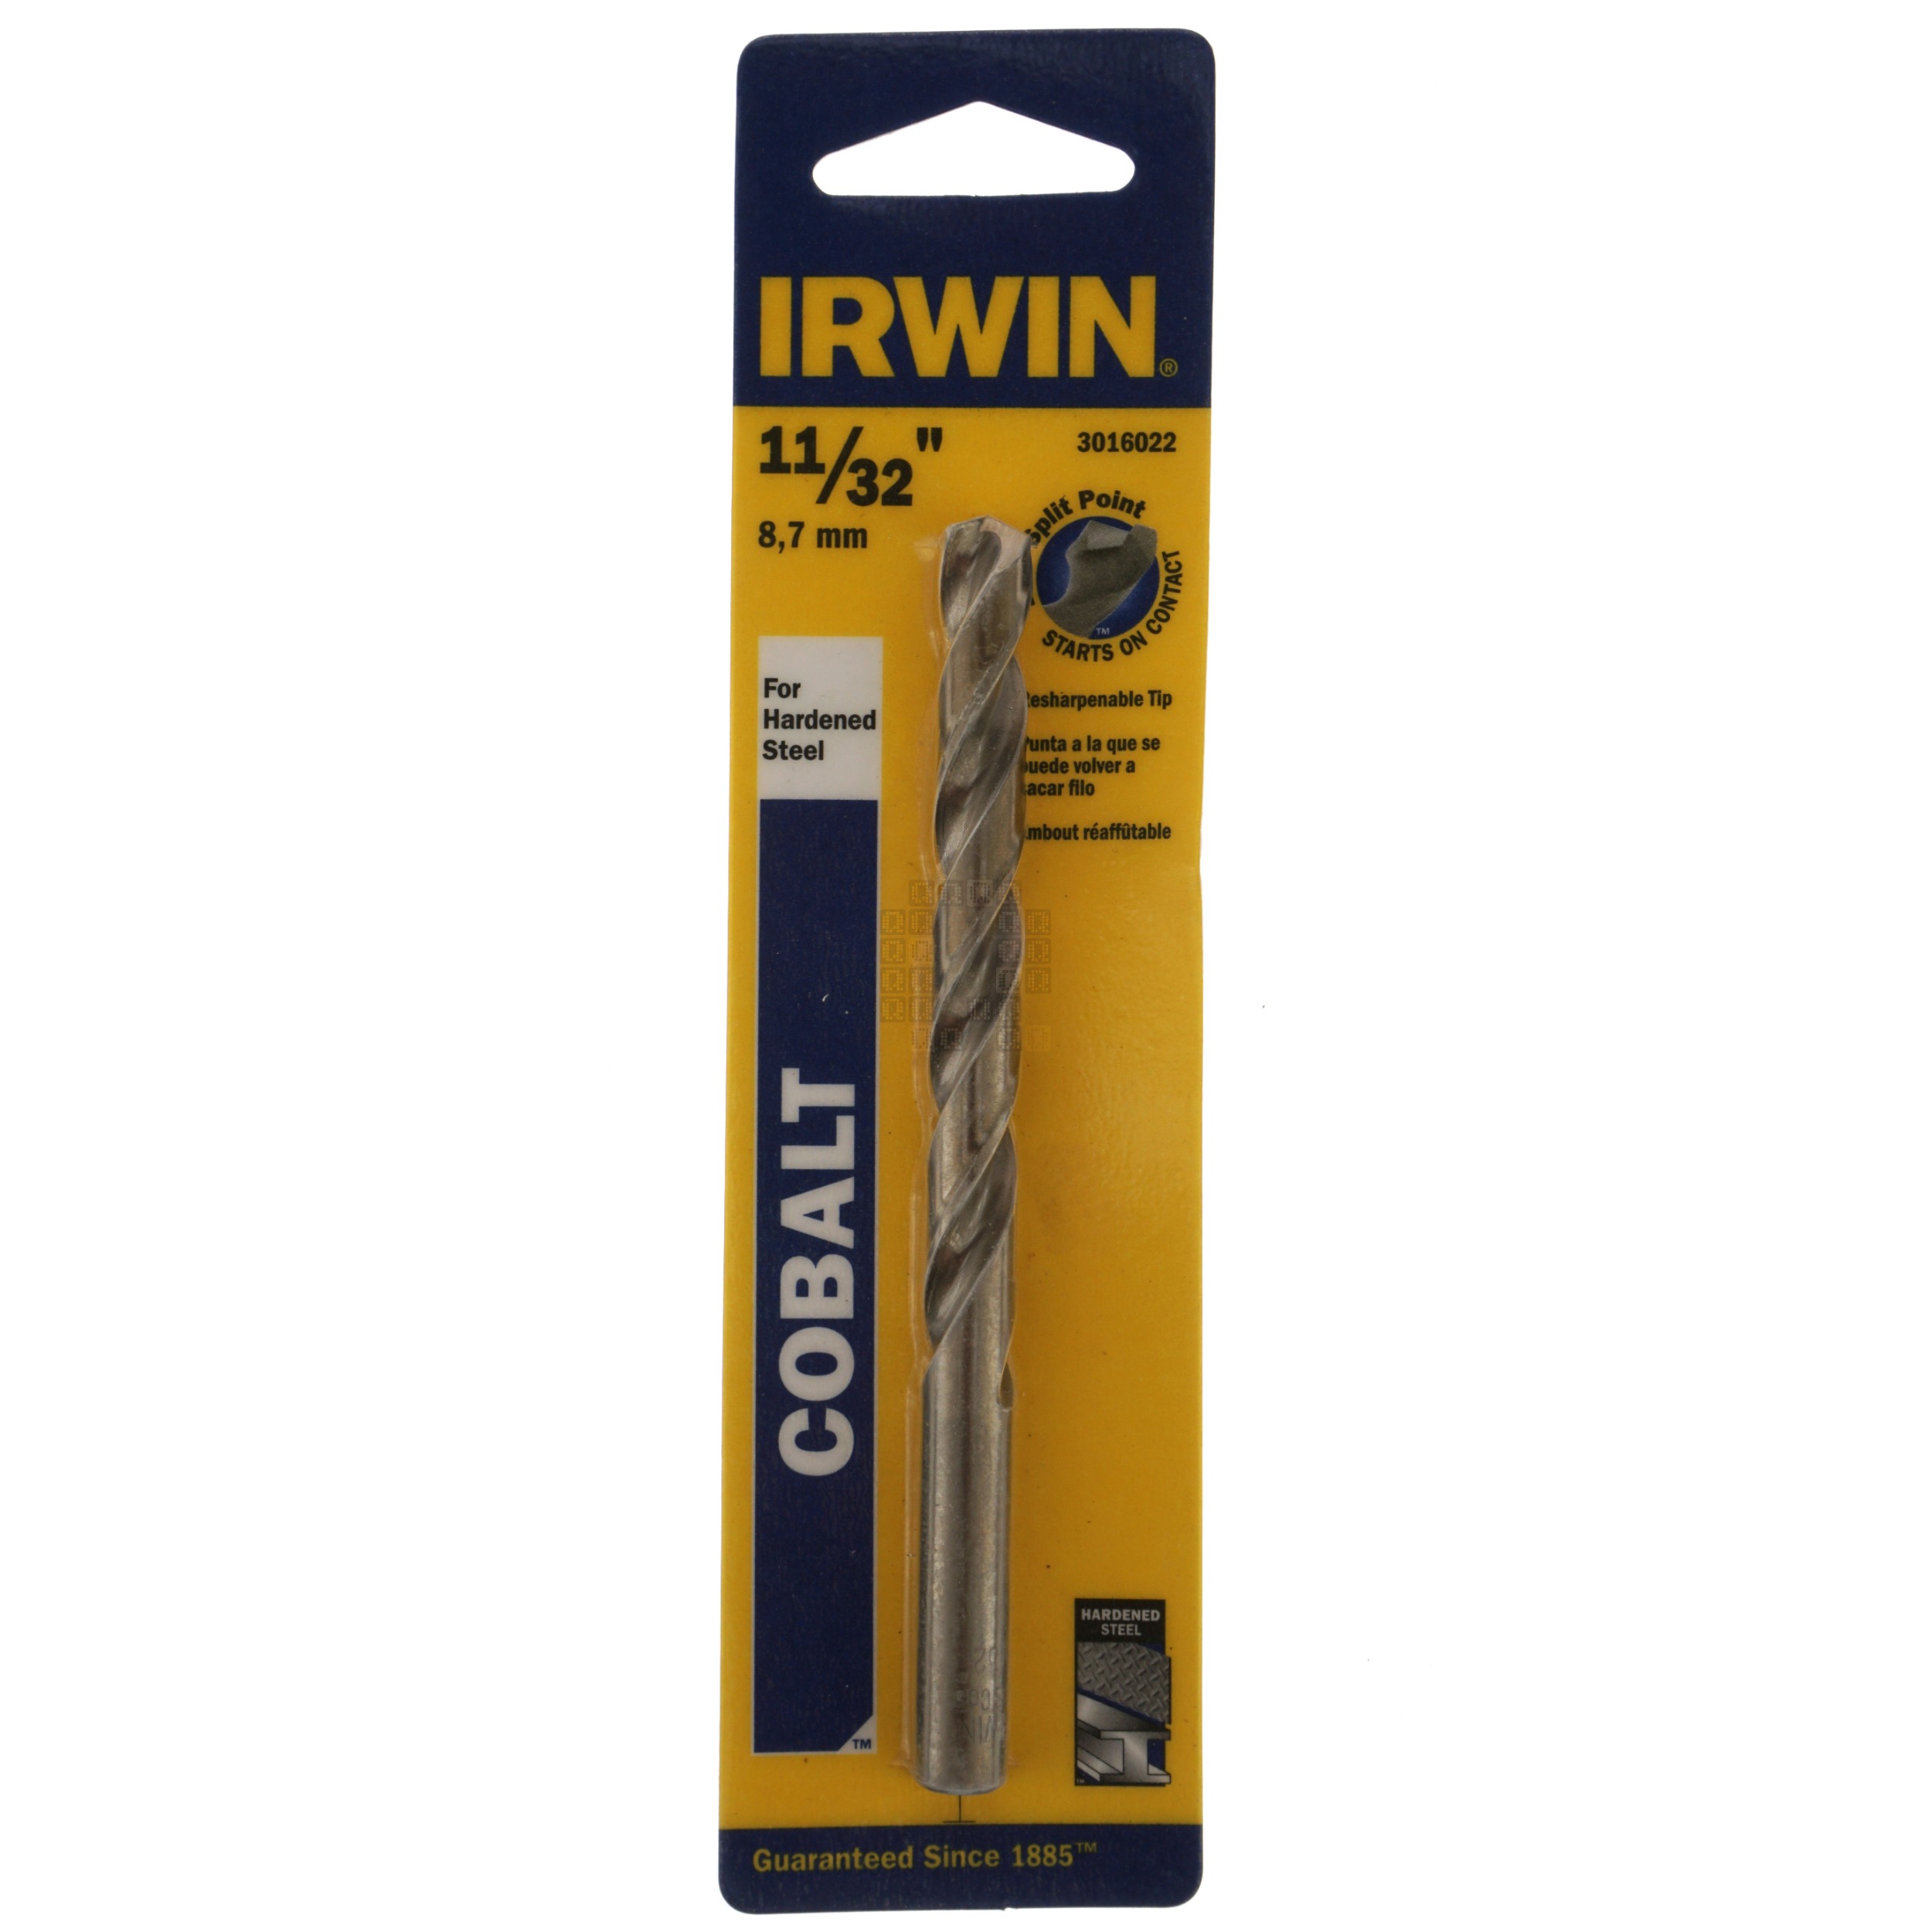 Irwin 3016022 11/32" Cobalt 135° Split Point Drill Bit